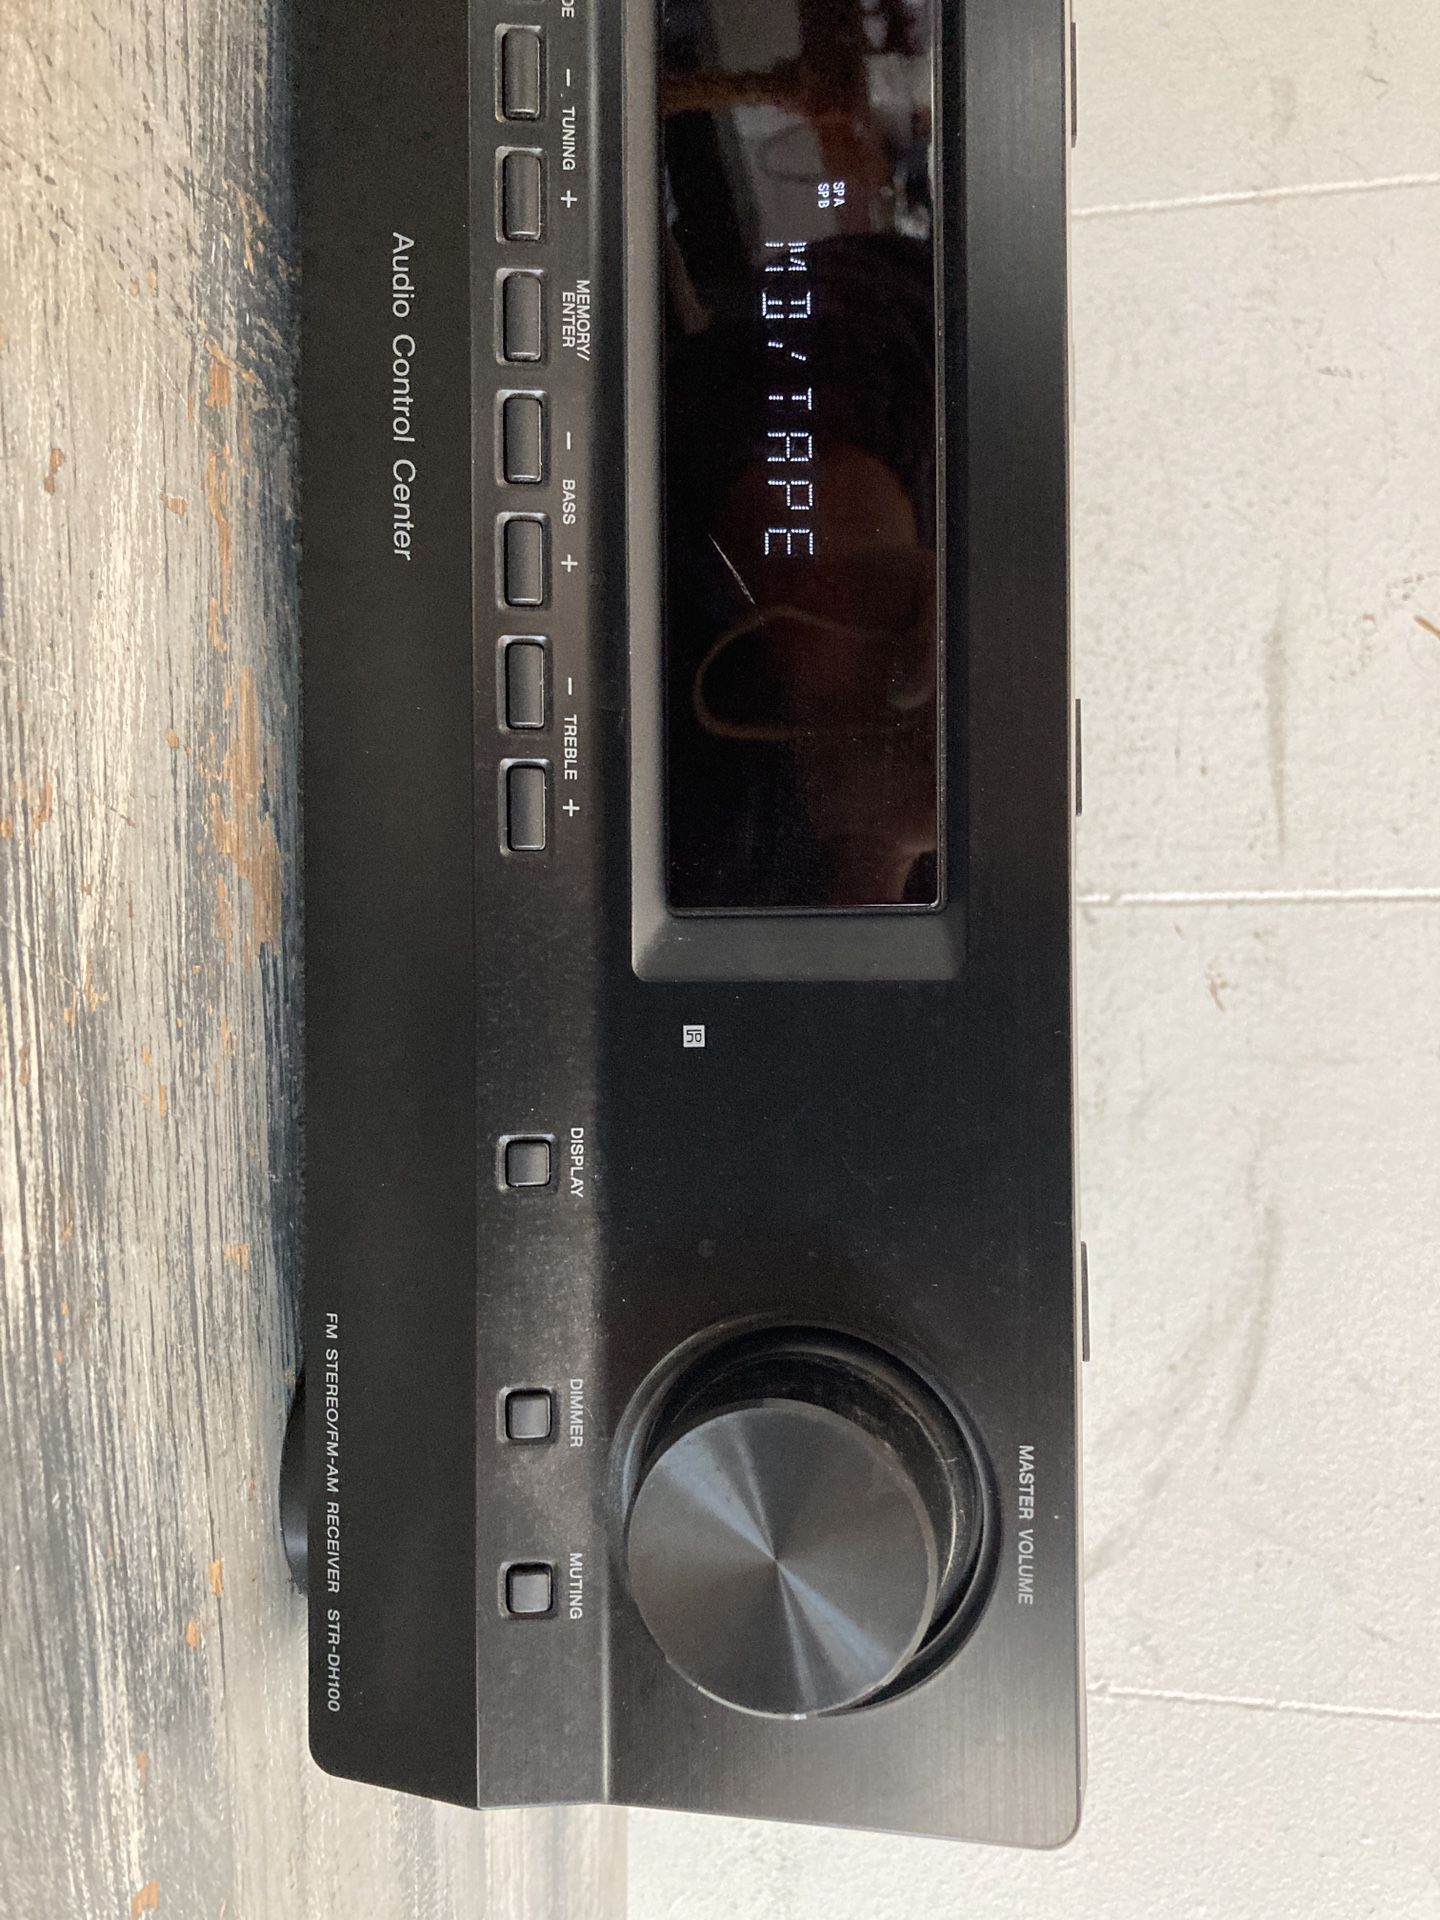 Sony STR-DH100 AM/FM Stereo Receiver